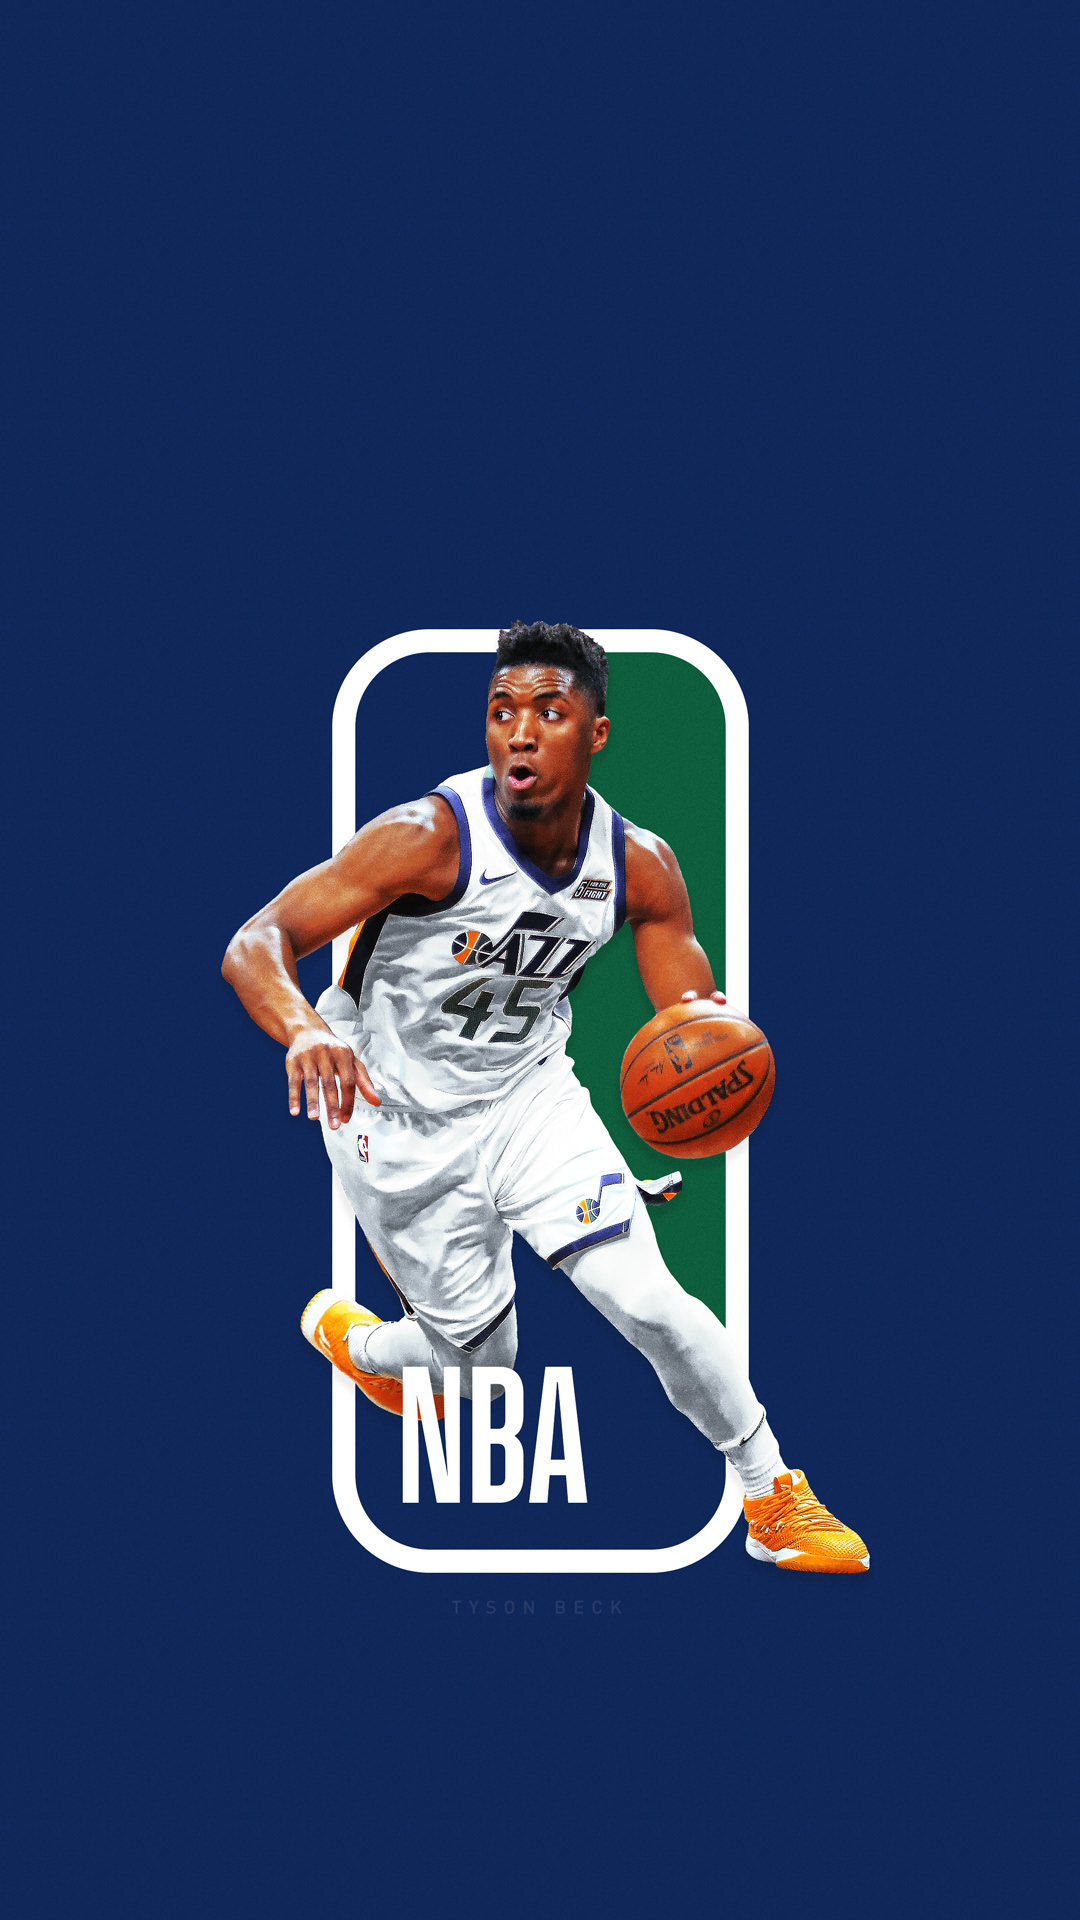 The Next NBA logo? NBA Logoman Series on Behance